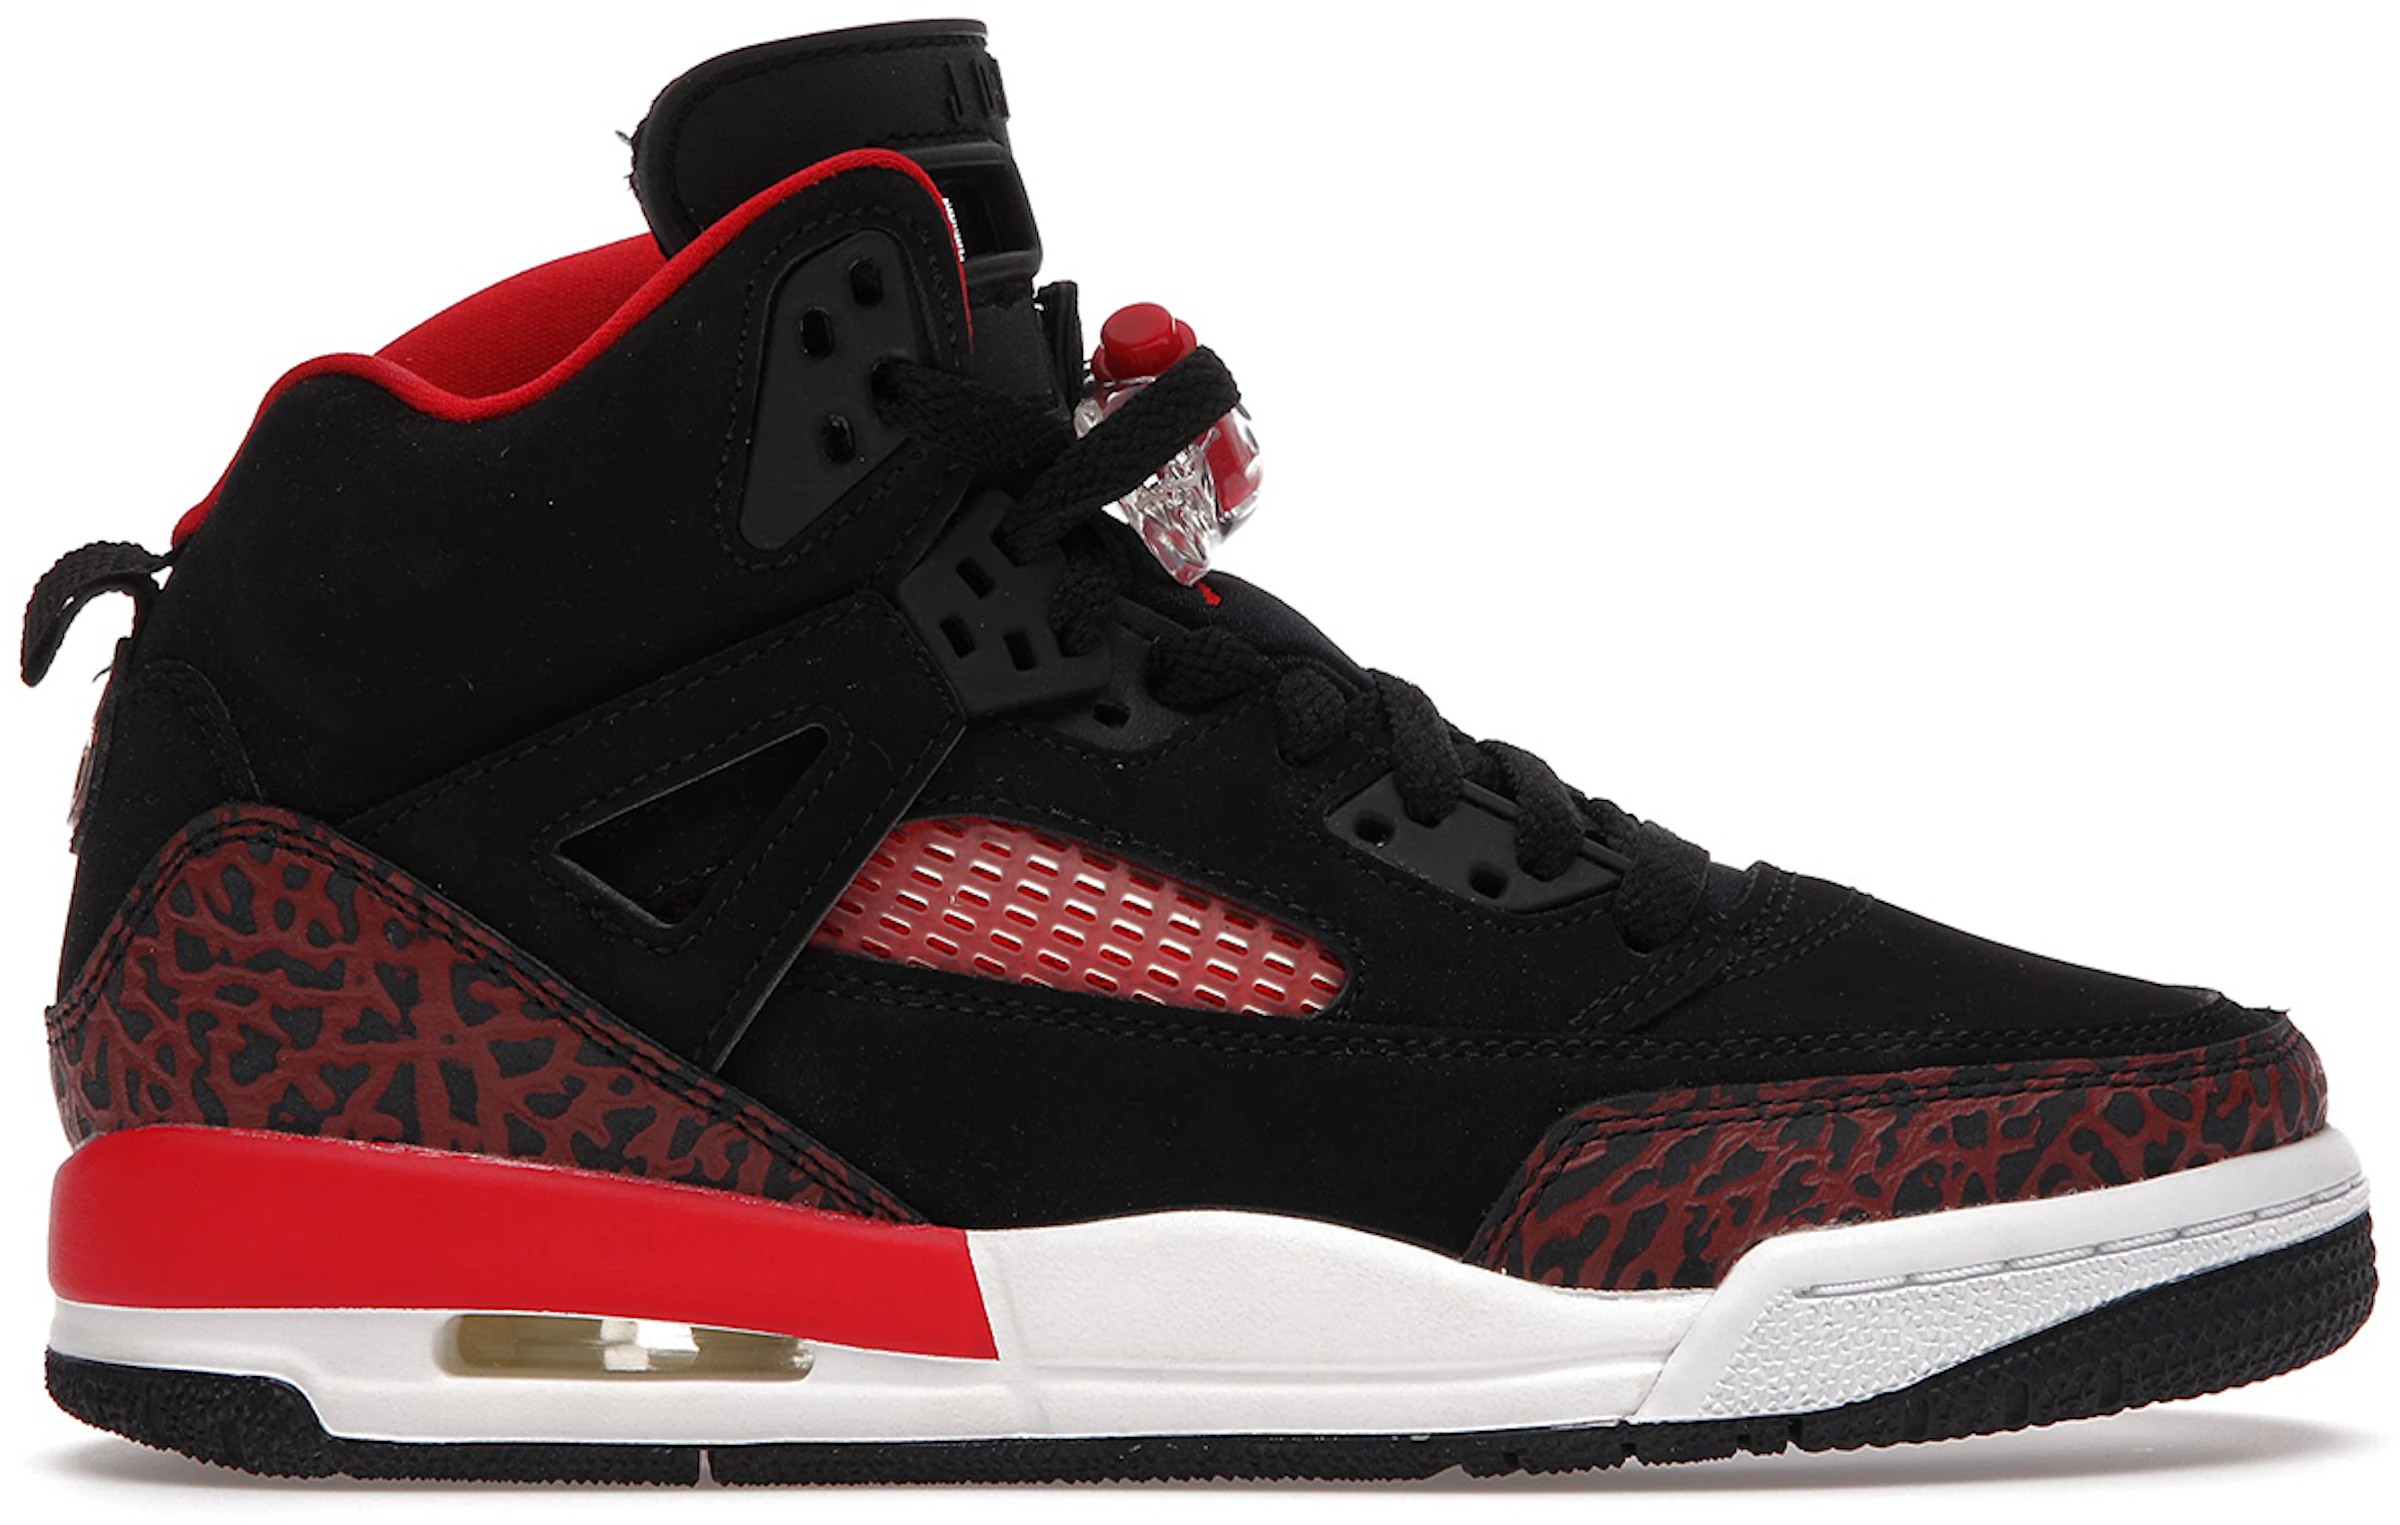 Buy Air Jordan Spizike Shoes & New Sneakers - StockX